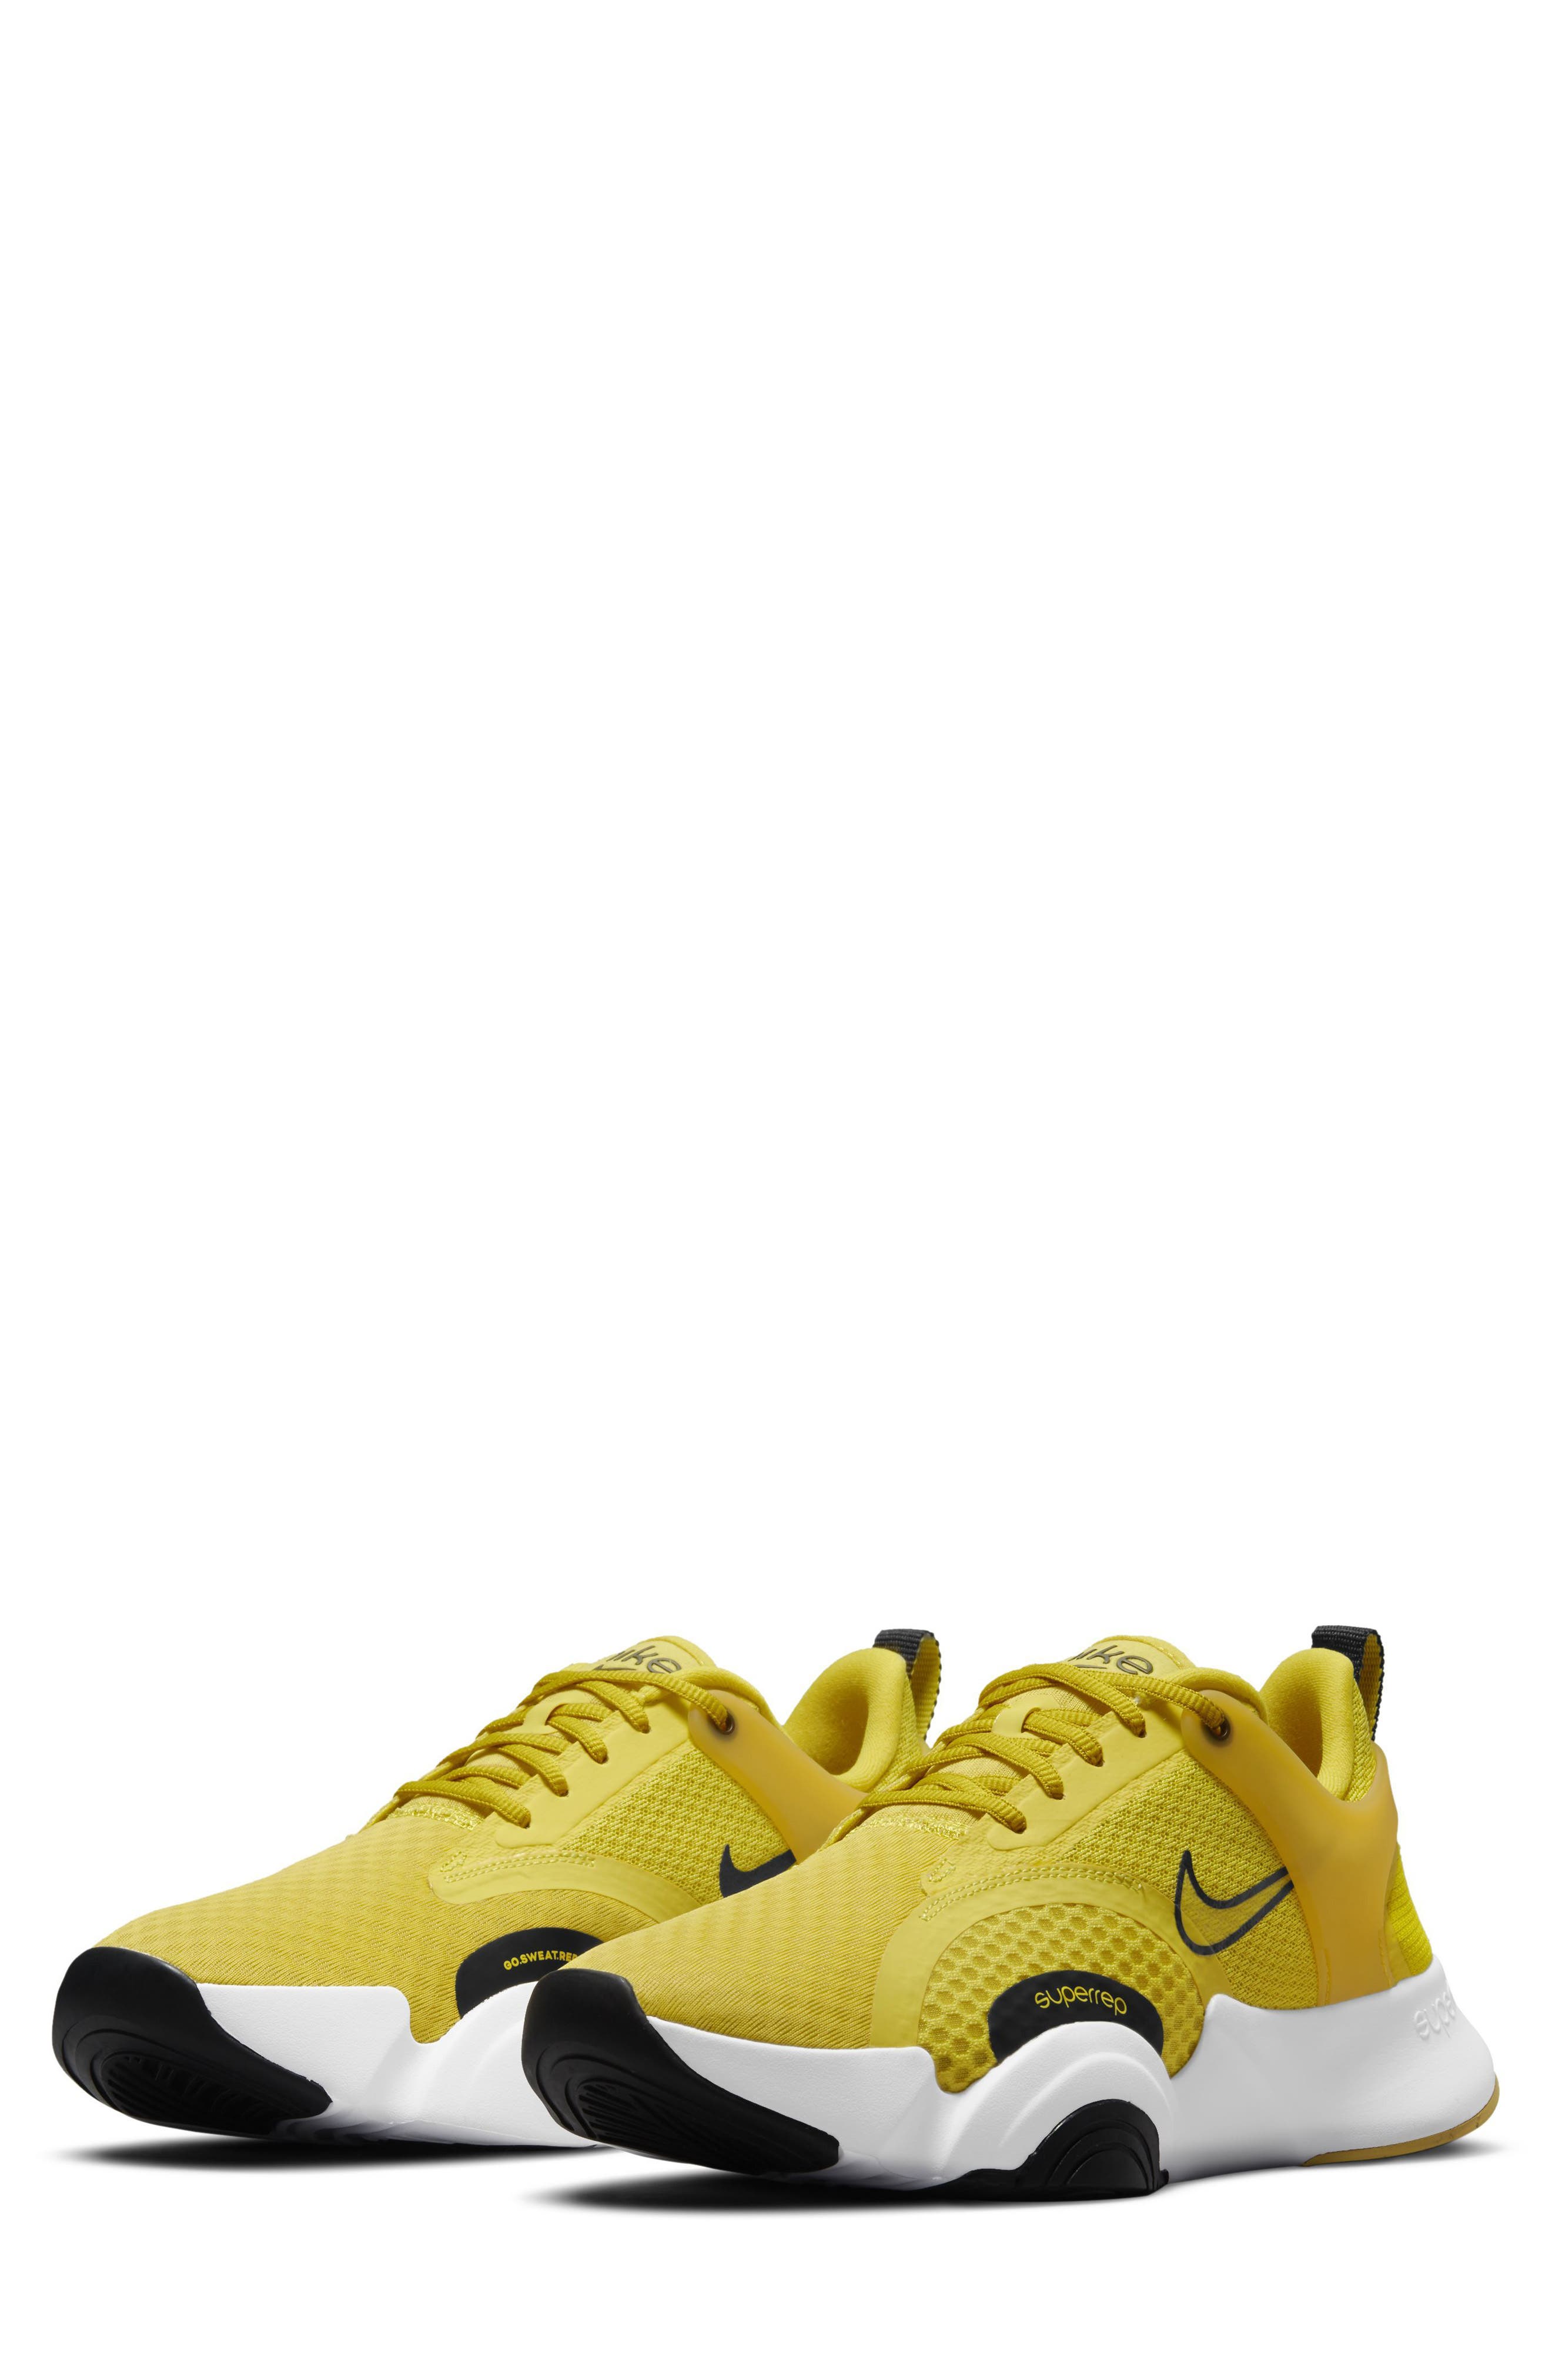 nike shoes yellow